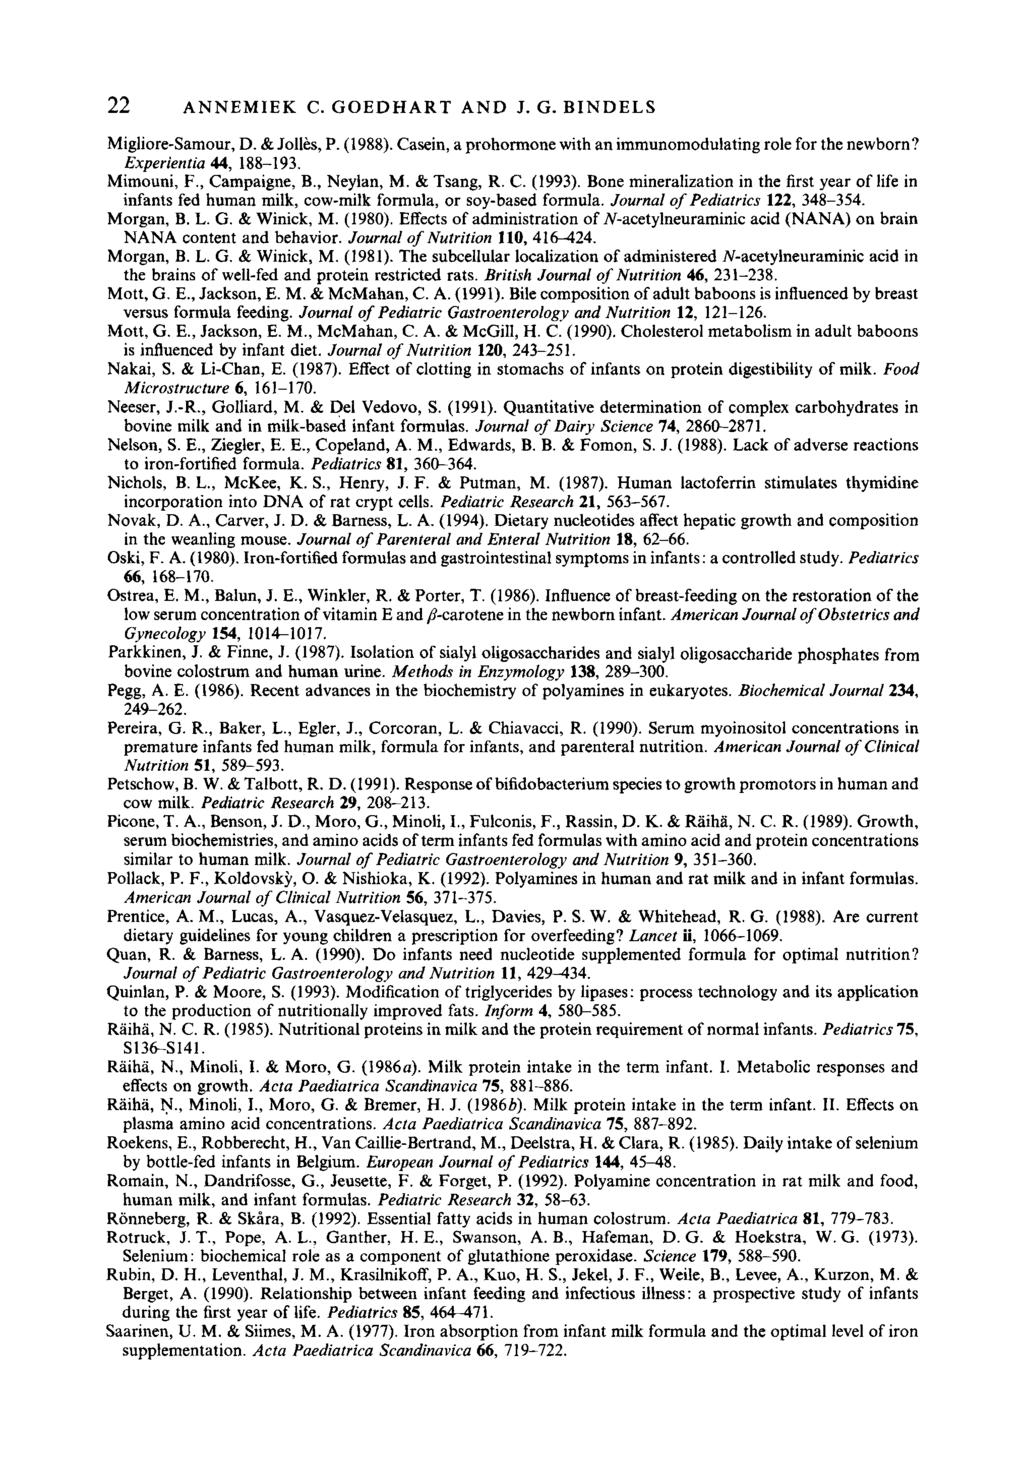 22 ANNEMIEK C. GOEDHART AND J. G. BINDELS Migliore-Samour, D. & Jolles, P. (1988). Casein, a prohormone with an immunomodulating role for the newborn? Experientia 44, 188-193. Mimouni, F.